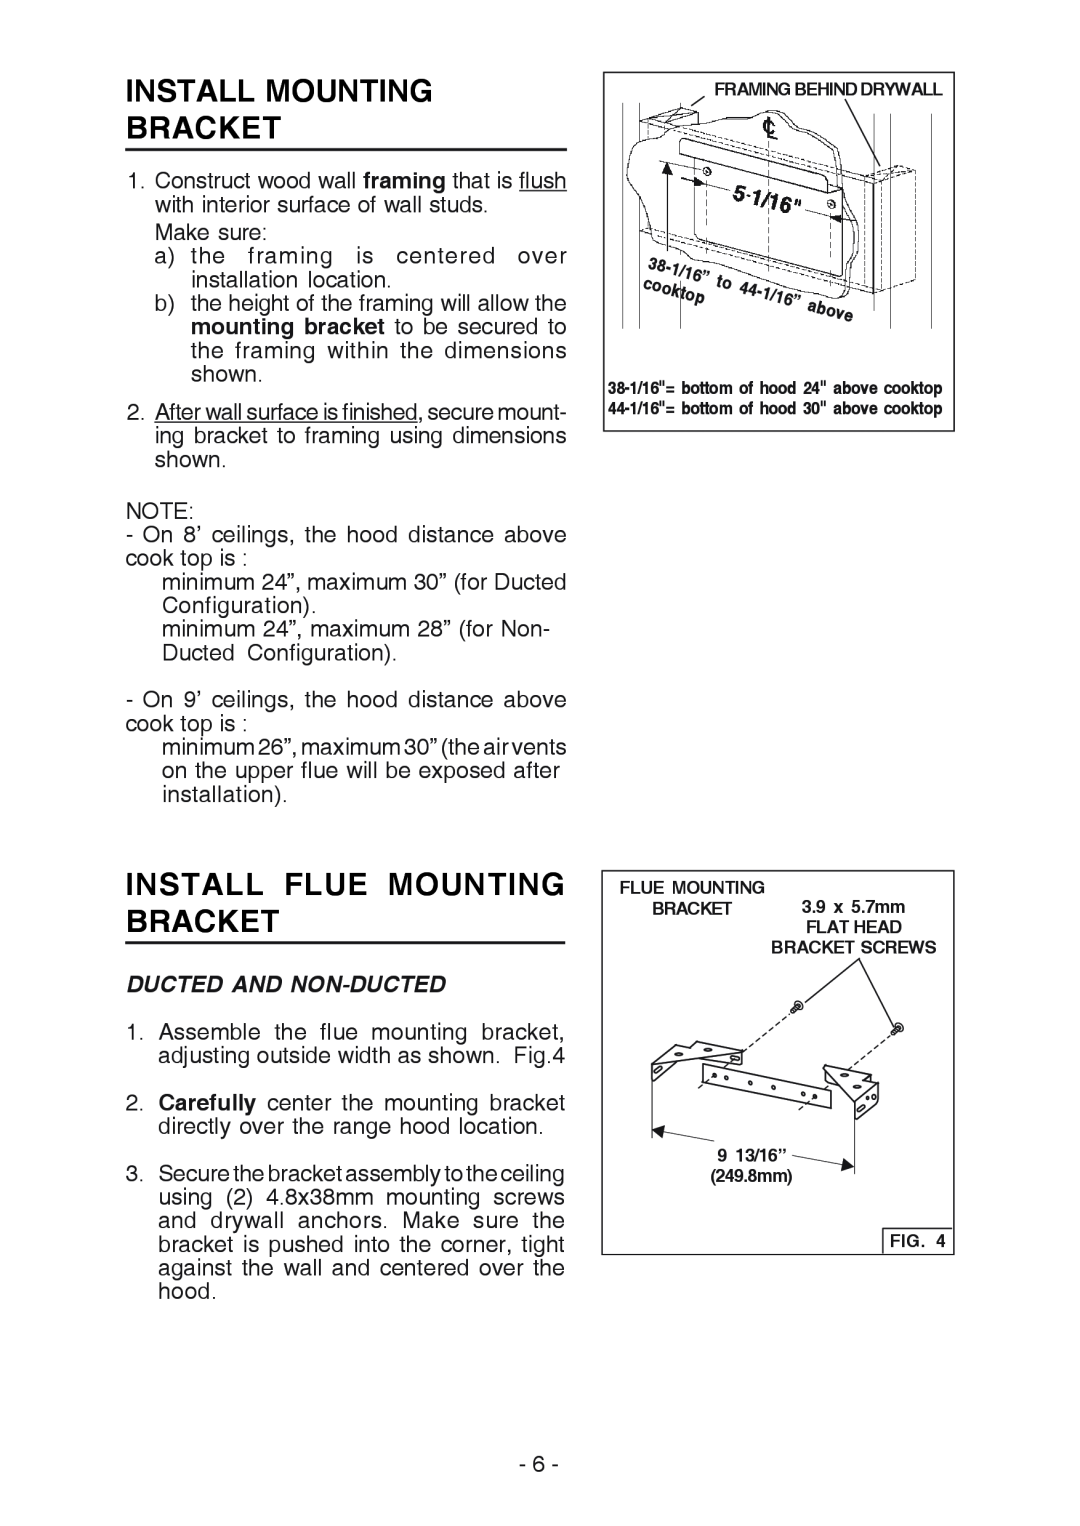 Broan RM519004 manual Install Mounting Bracket, Install Flue Mounting Bracket, Ducted And Non-Ducted 